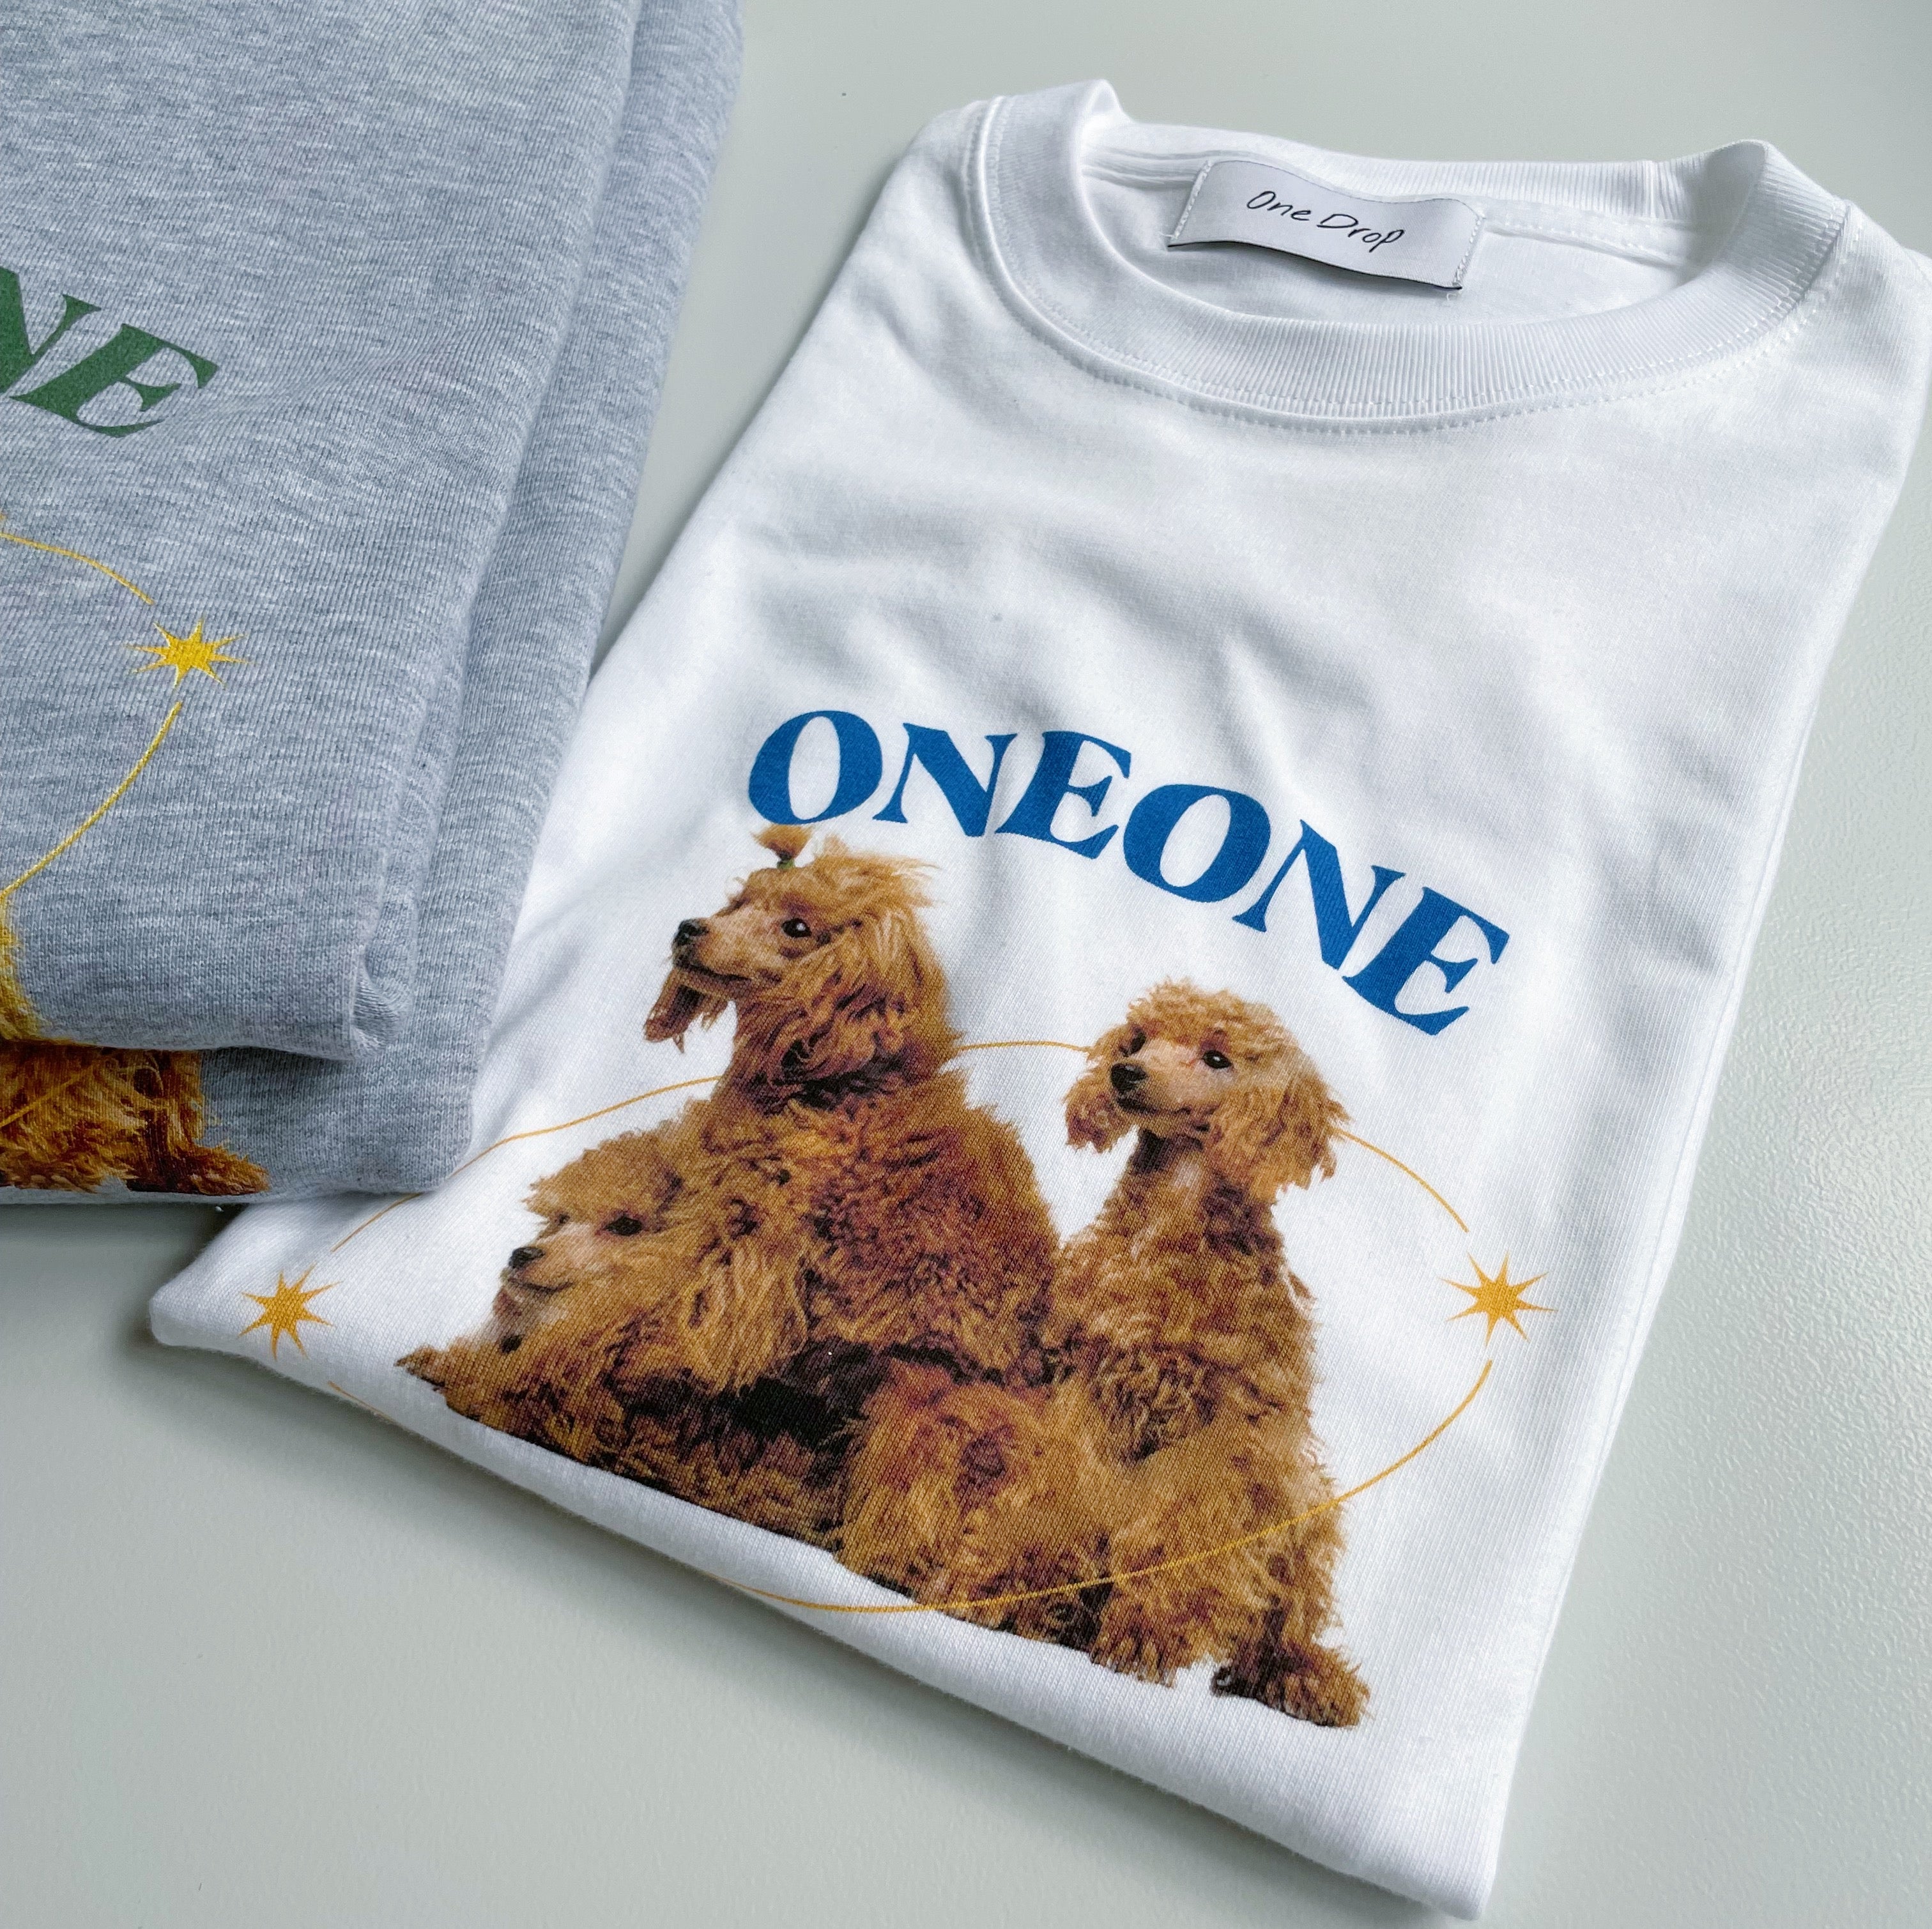 OneDrop ONEONE LongTshirt